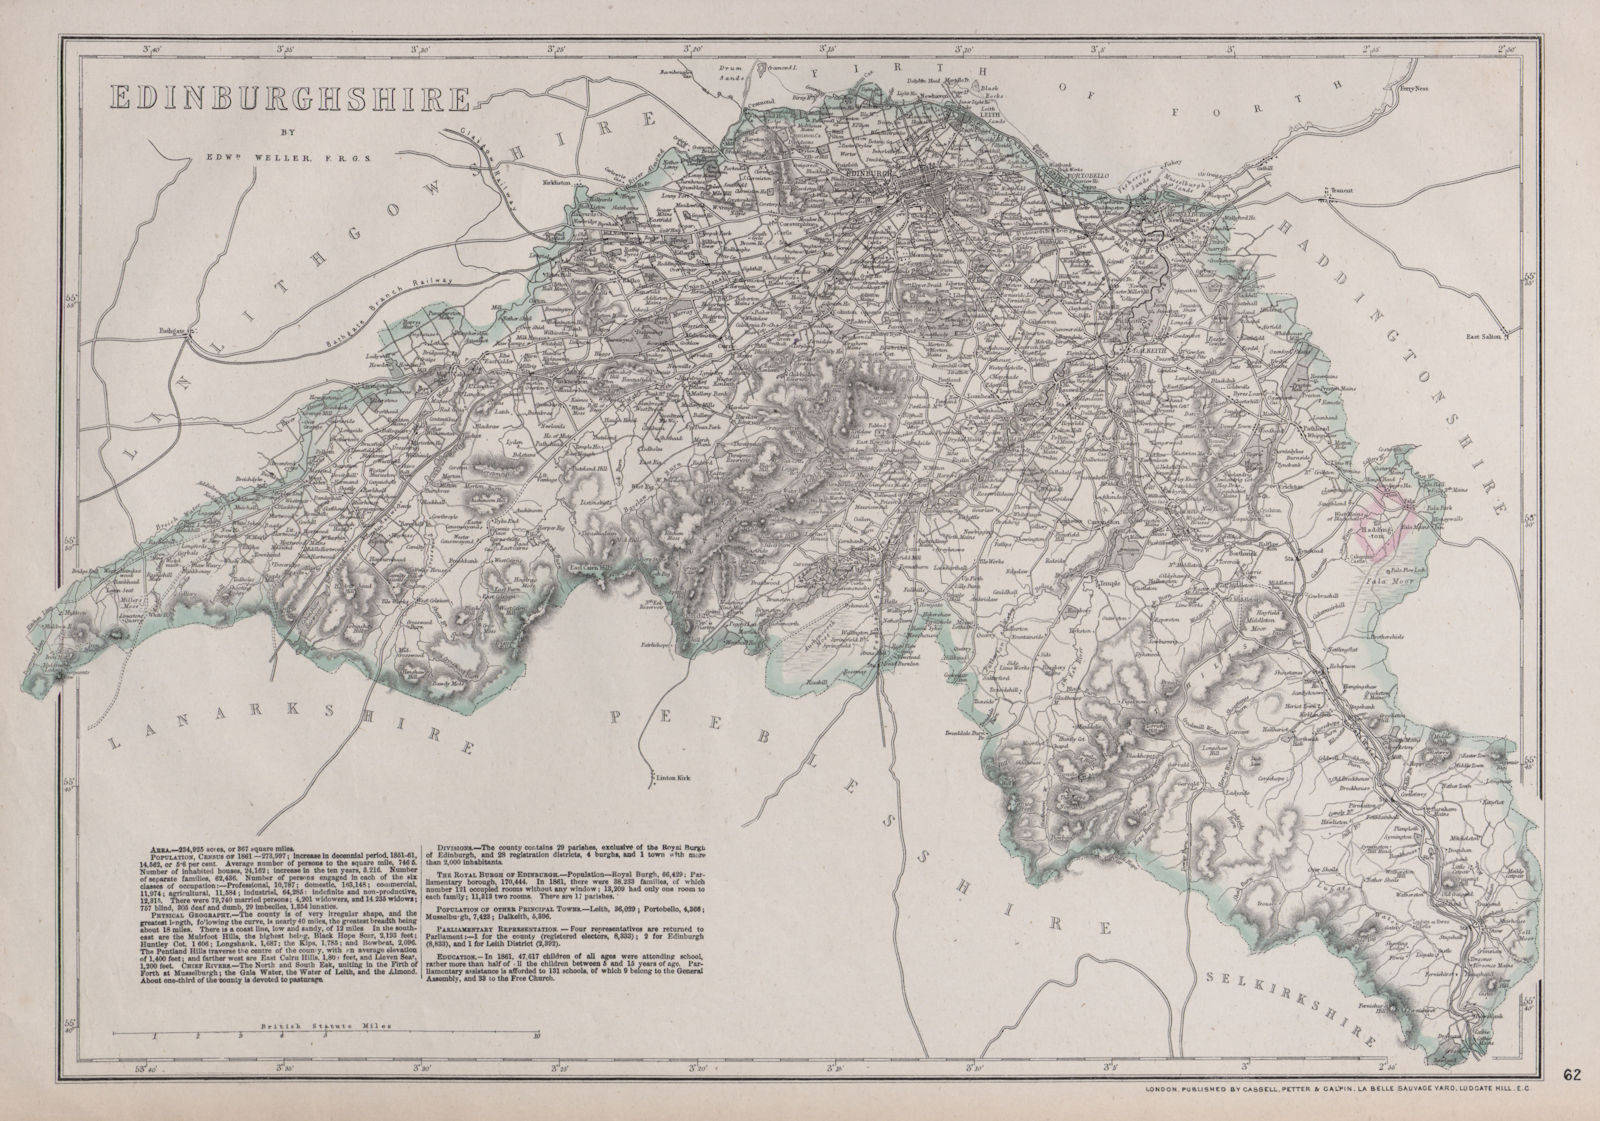 'Edinburghshire'. Midlothian. By EDWARD WELLER for the Dispatch Atlas 1868 map